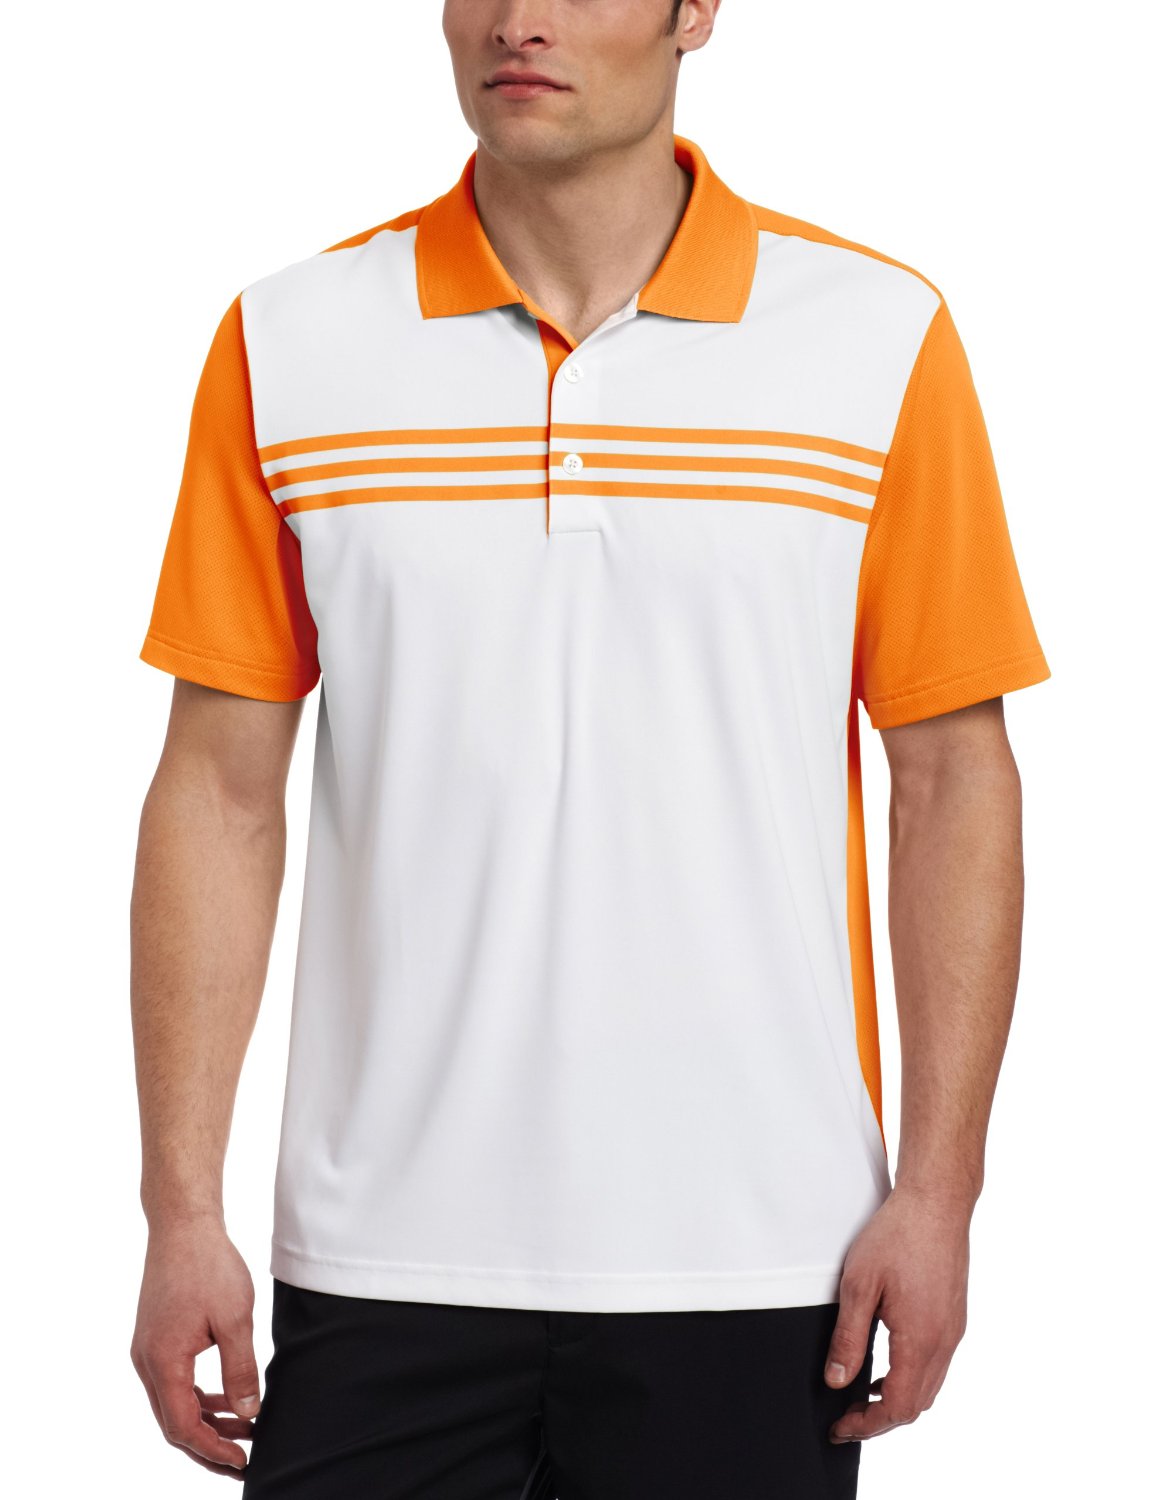 Adidas Climacool 3 Stripes Color Block Golf Polo Shirts